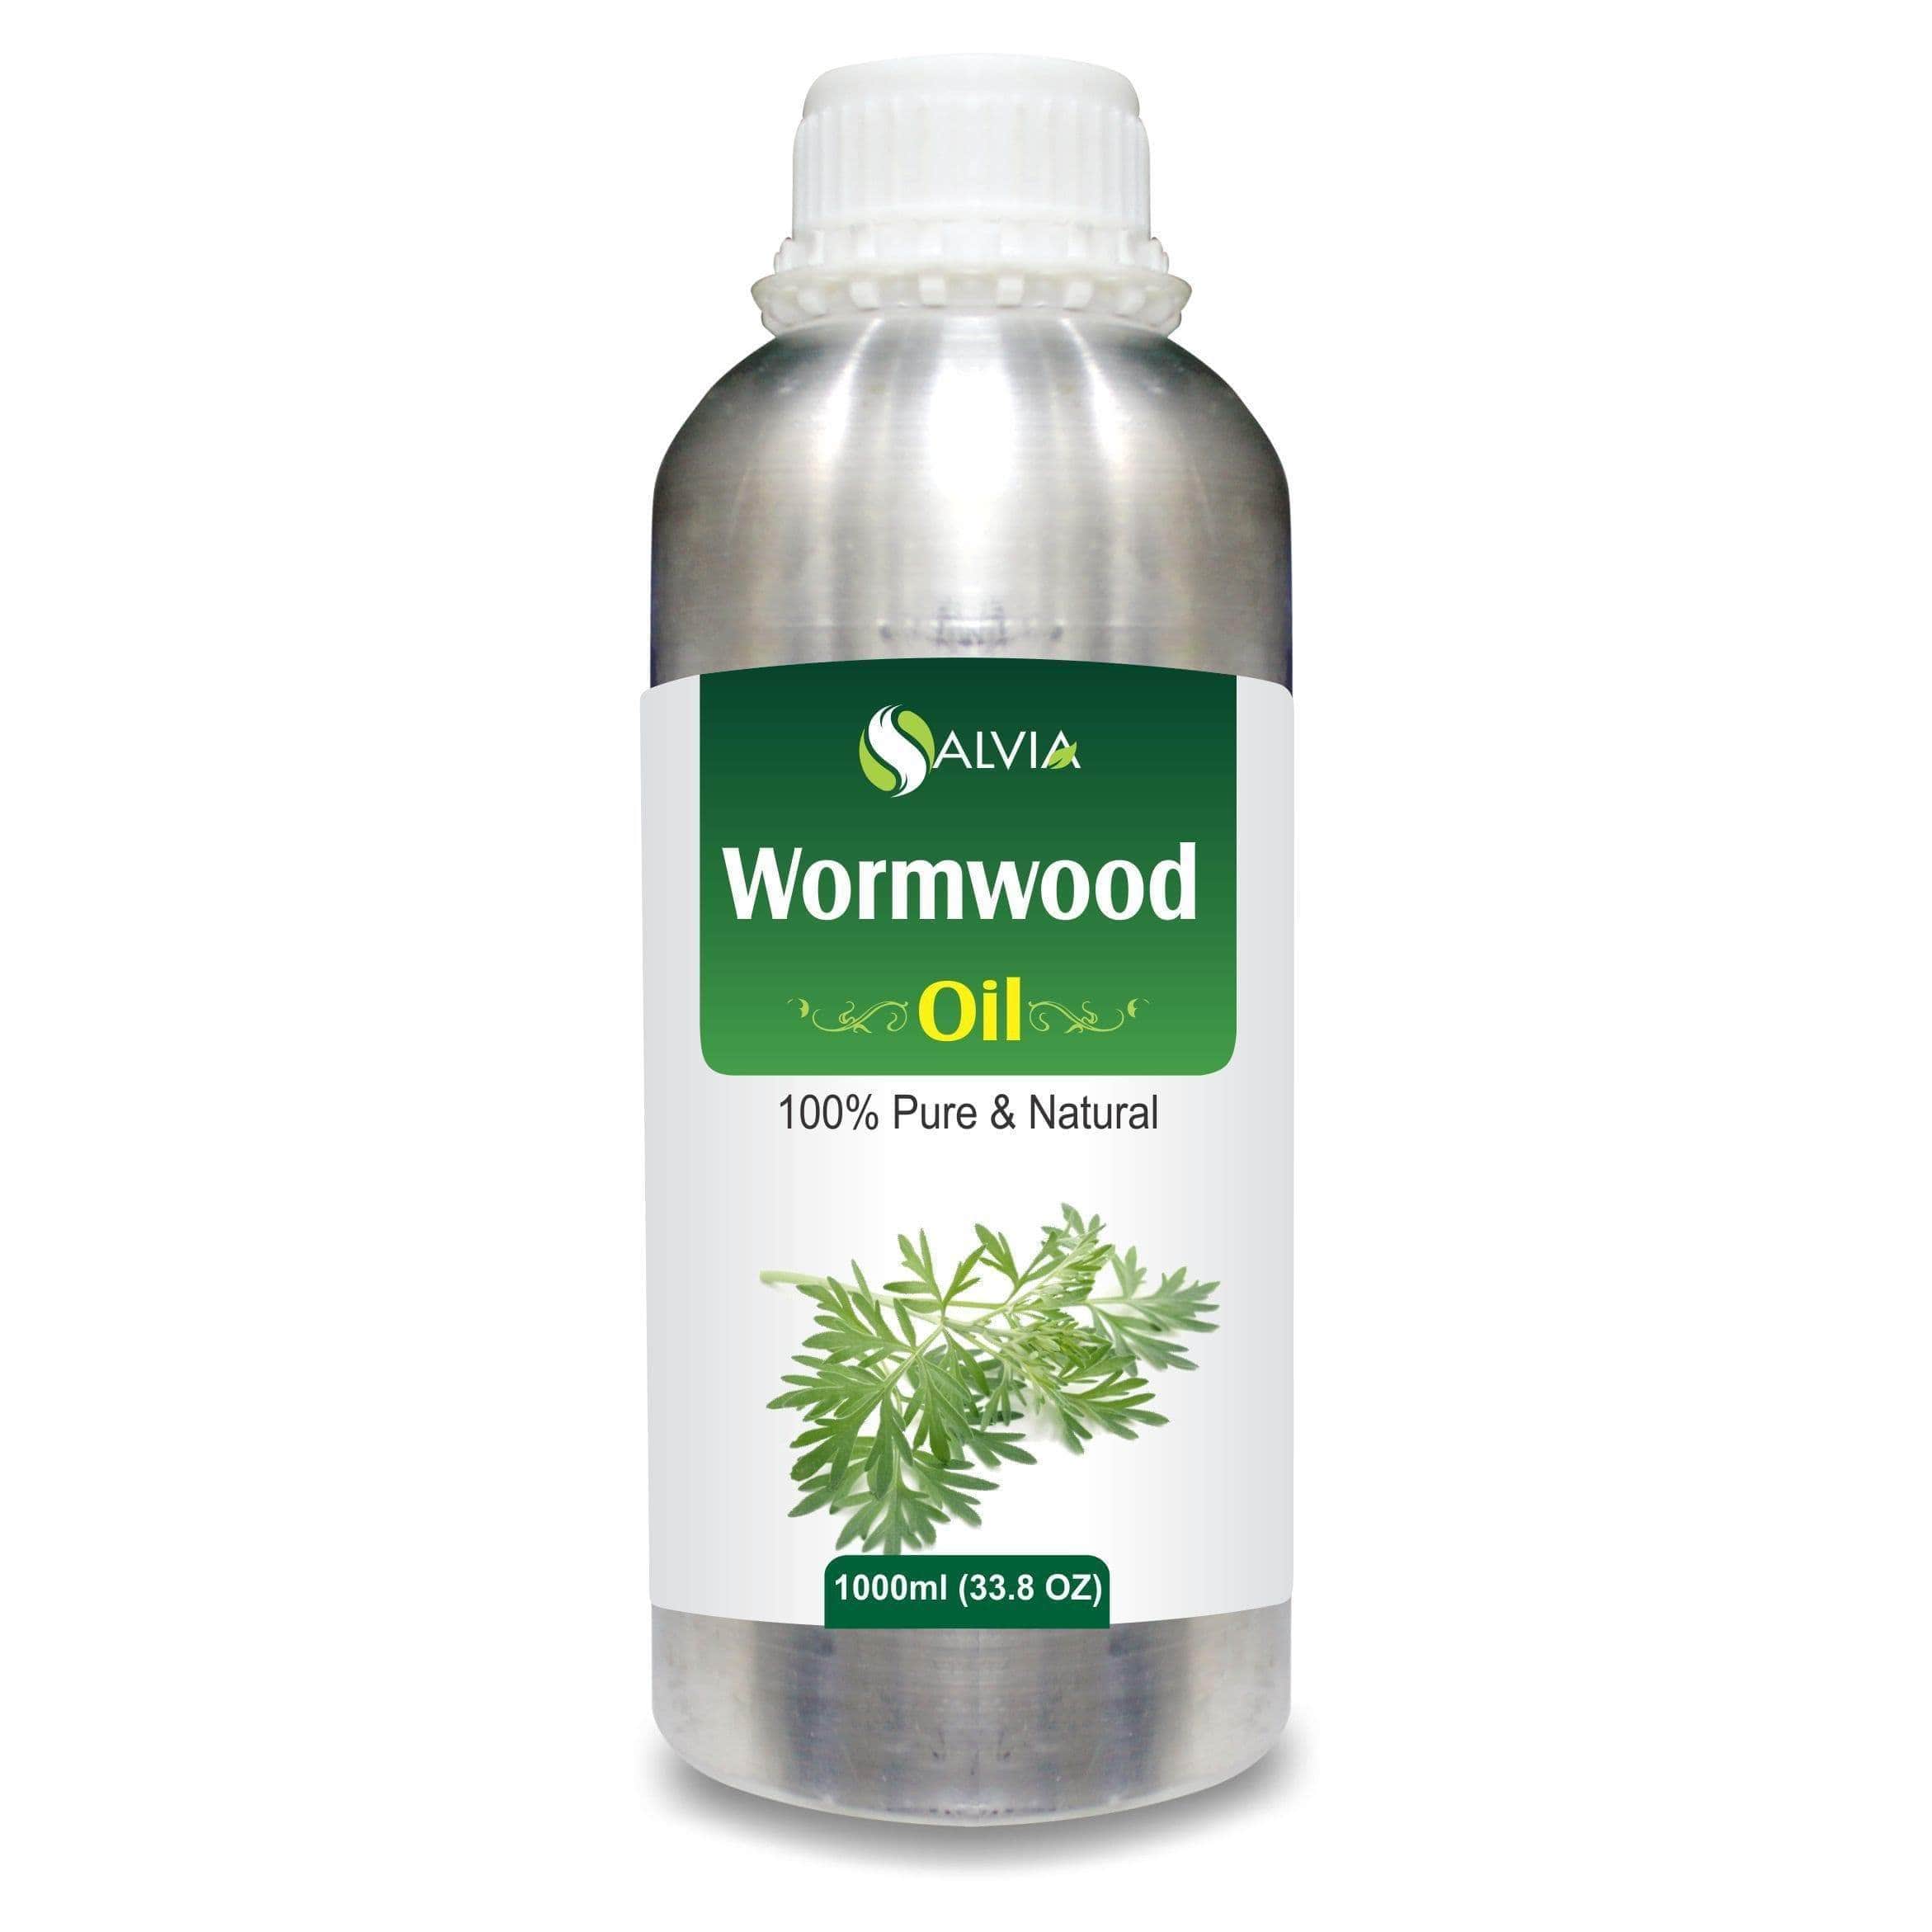 wormwood benefits for skin